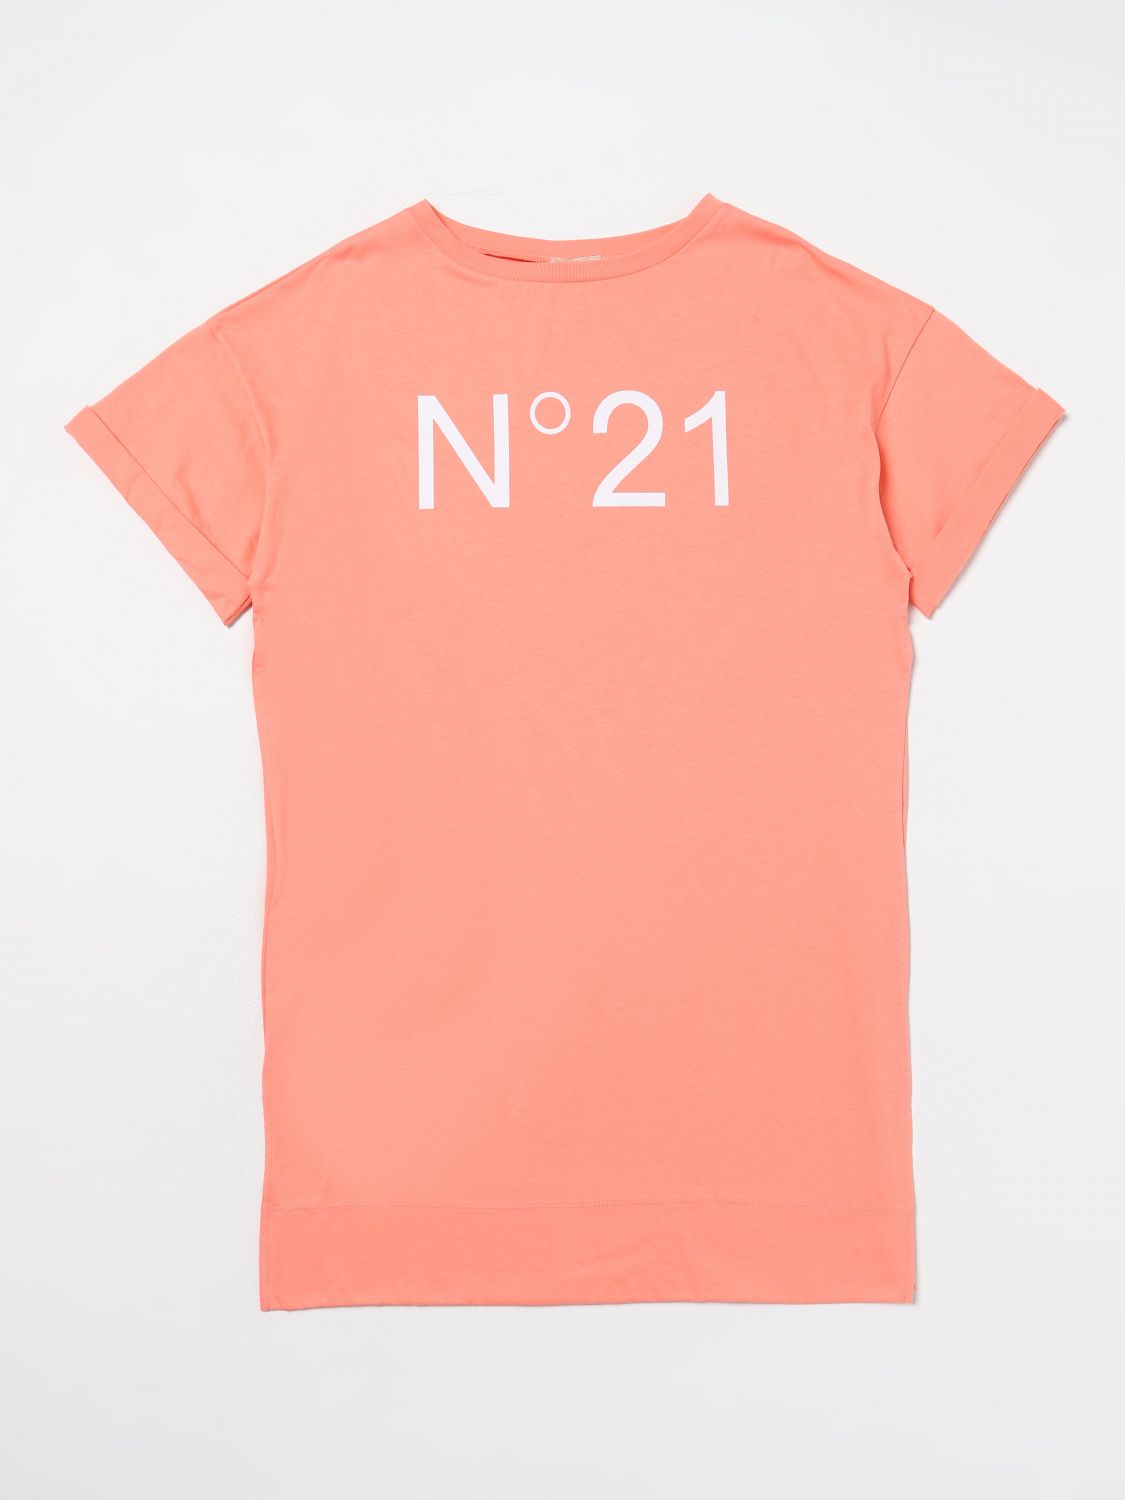 Shop N°21 Dress N° 21 Kids Color Peach